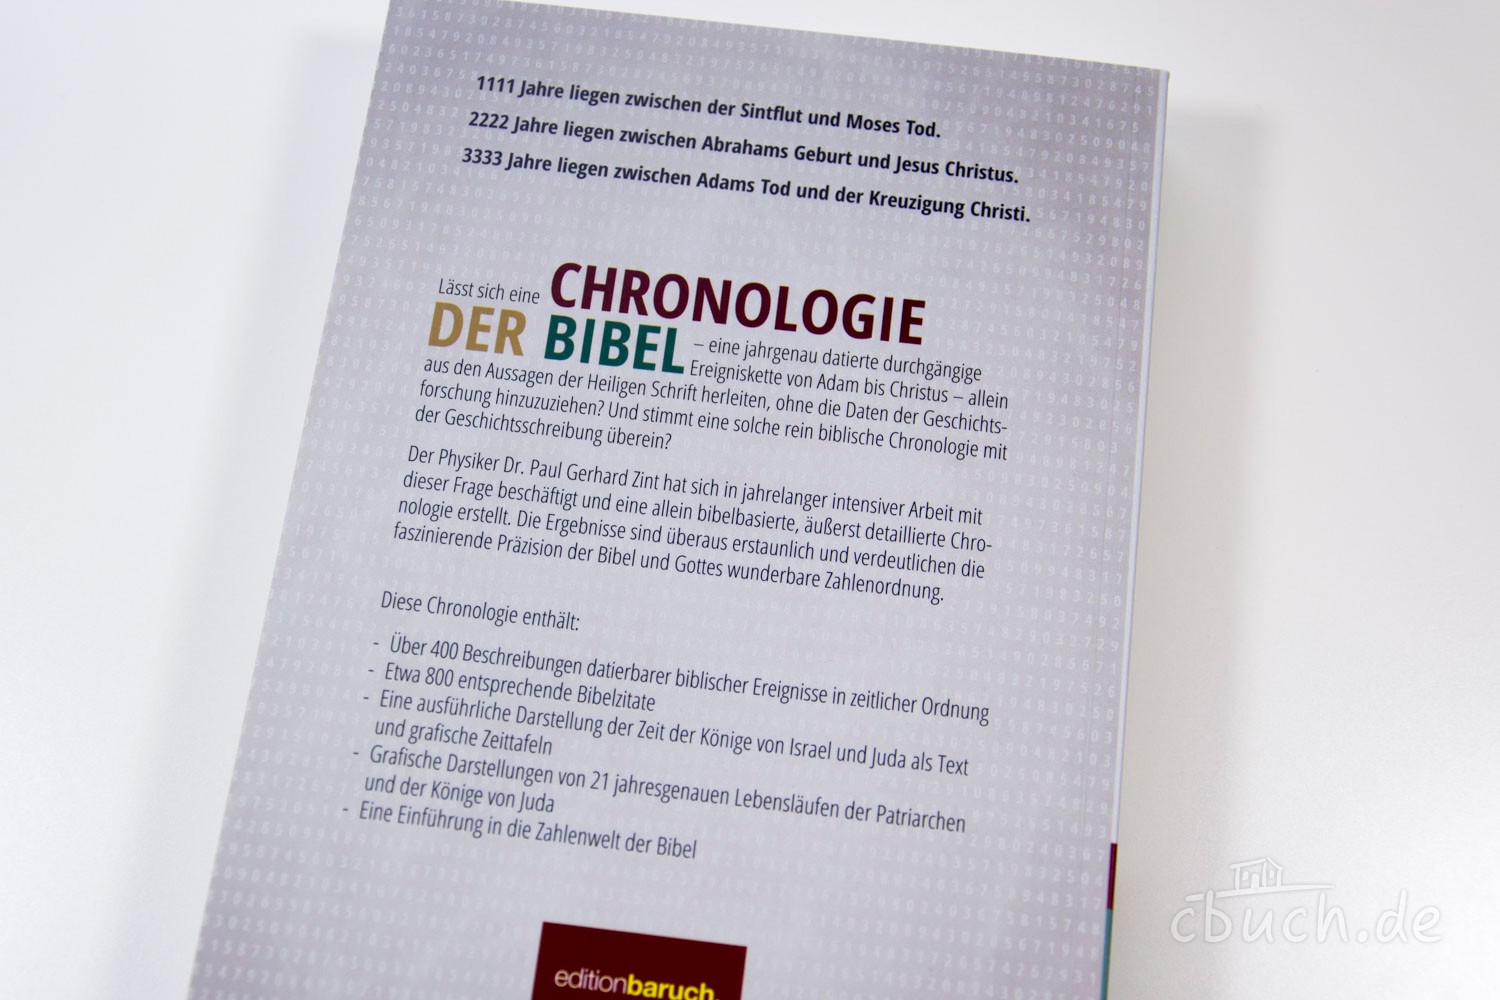 Chronologie der Bibel